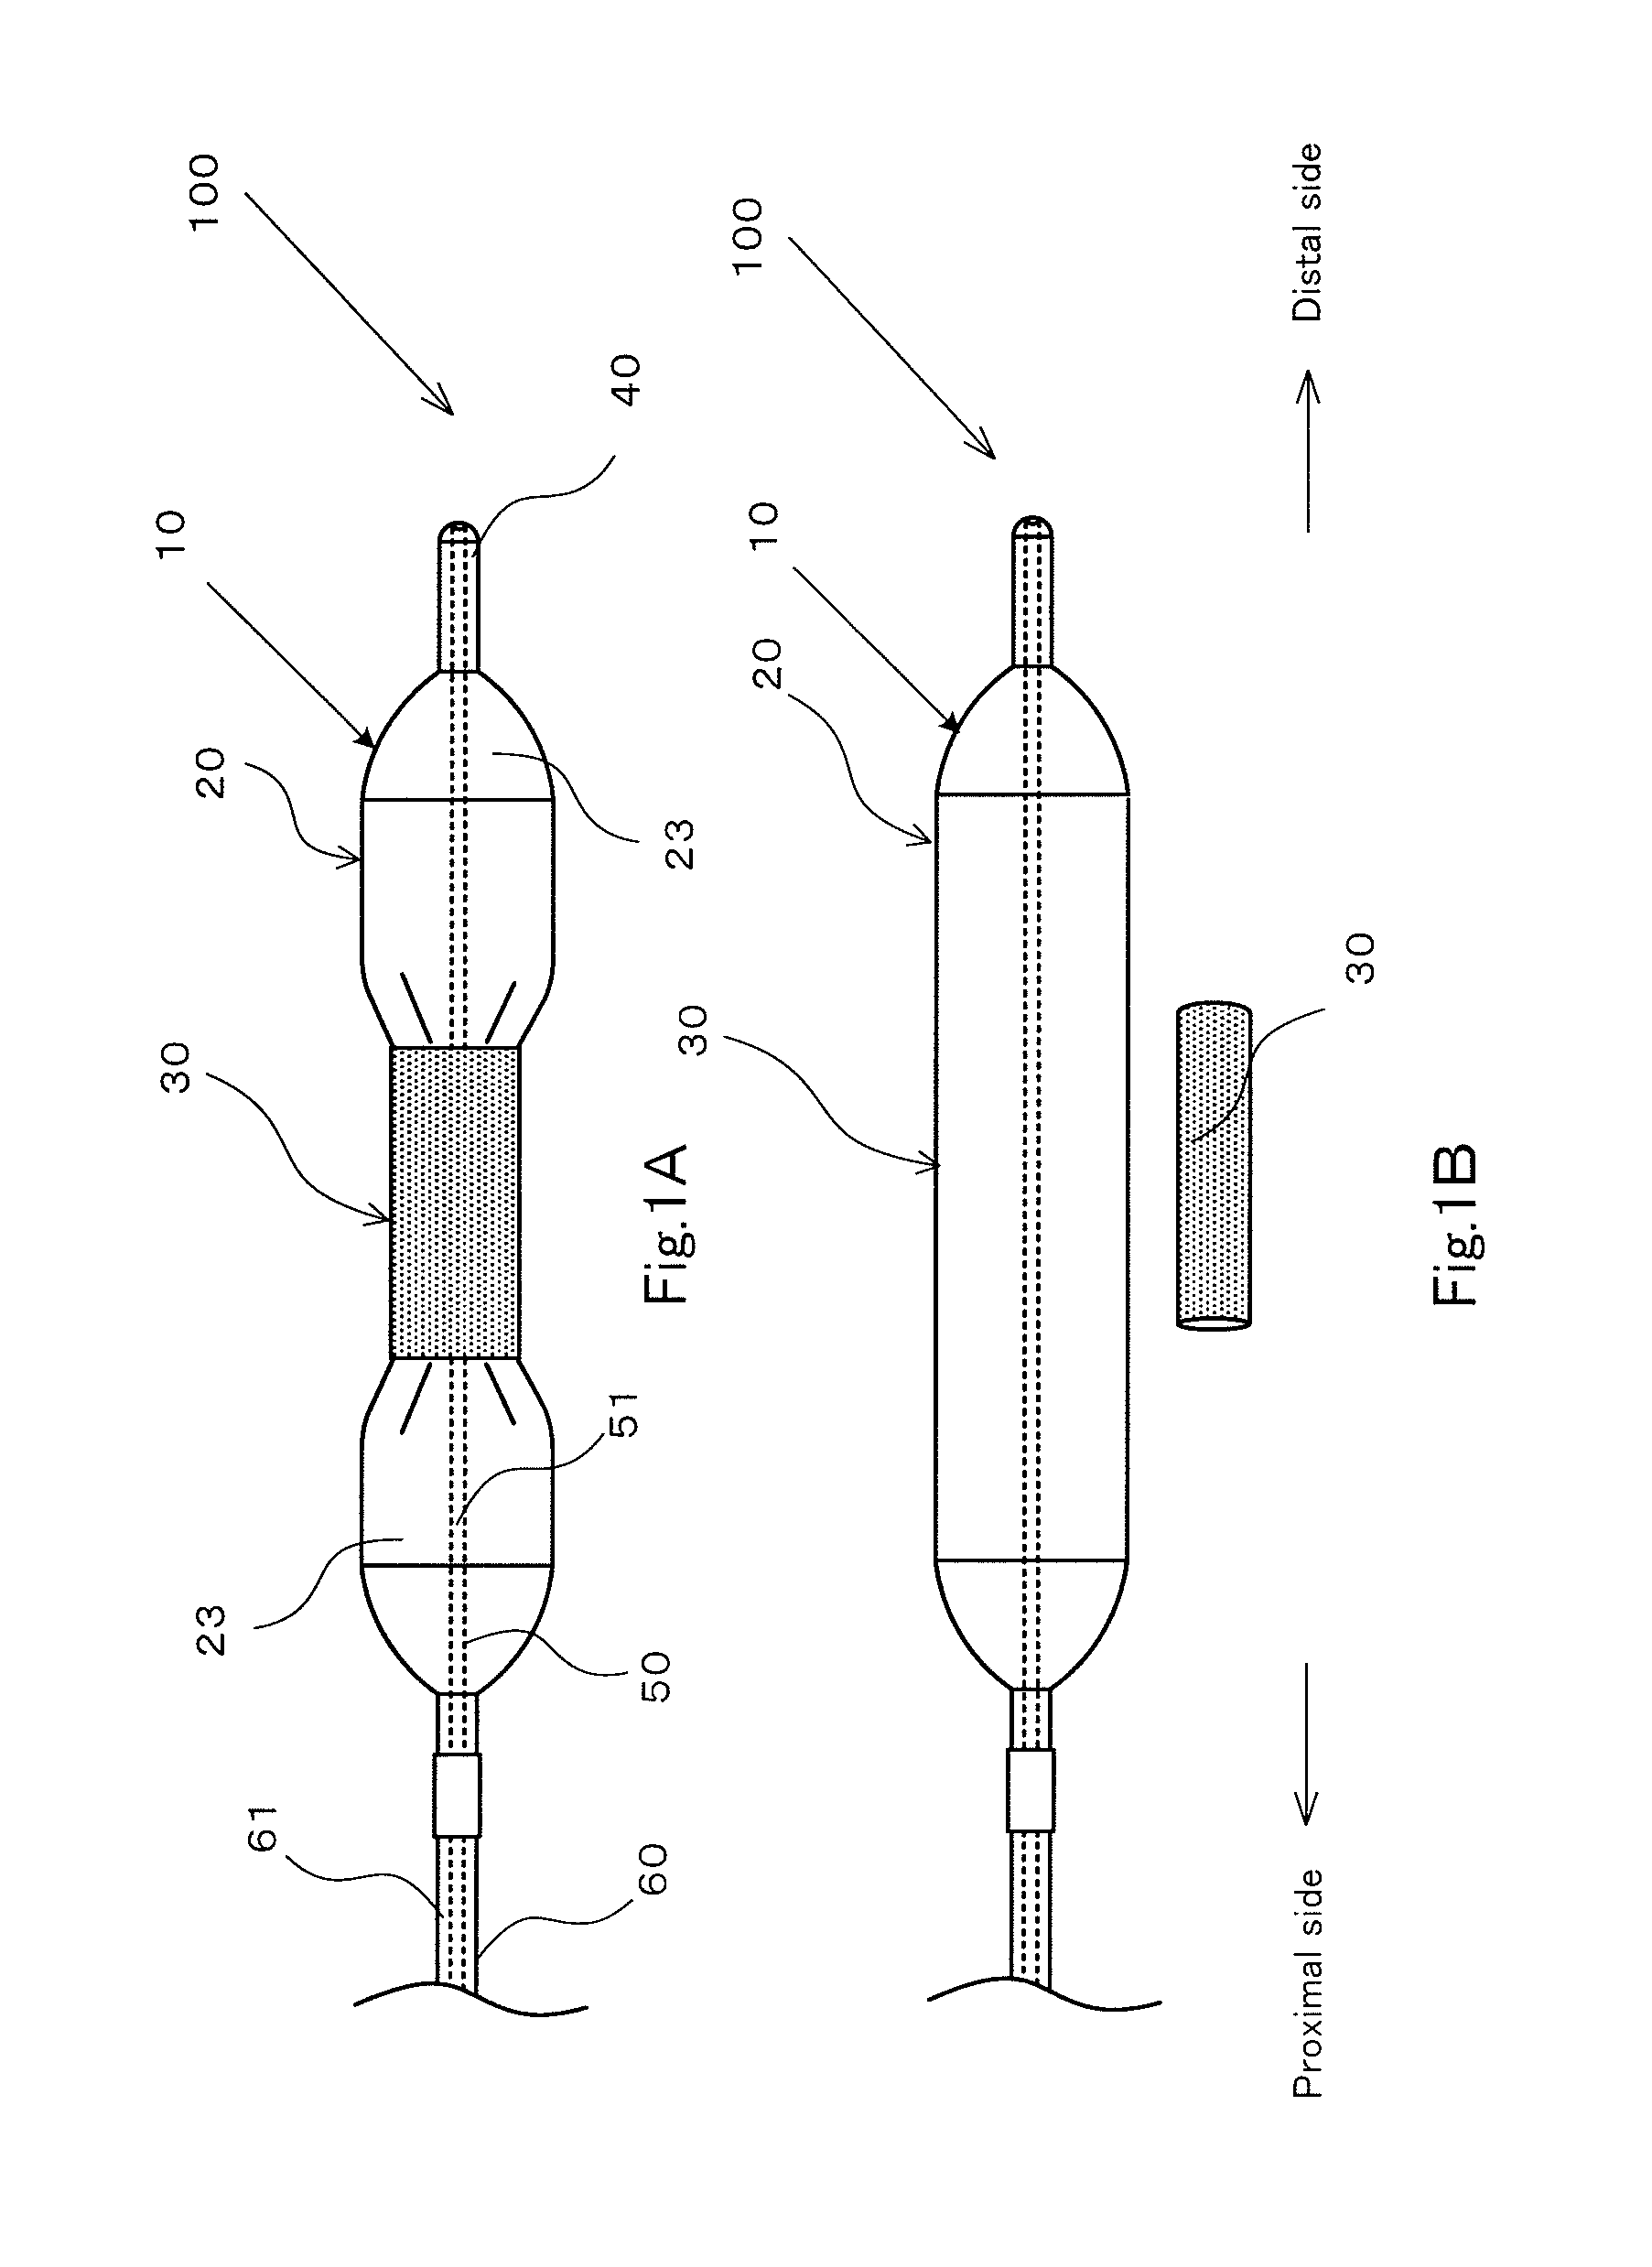 Catheter balloon, catheter, and method of manufacturing the catheter balloon